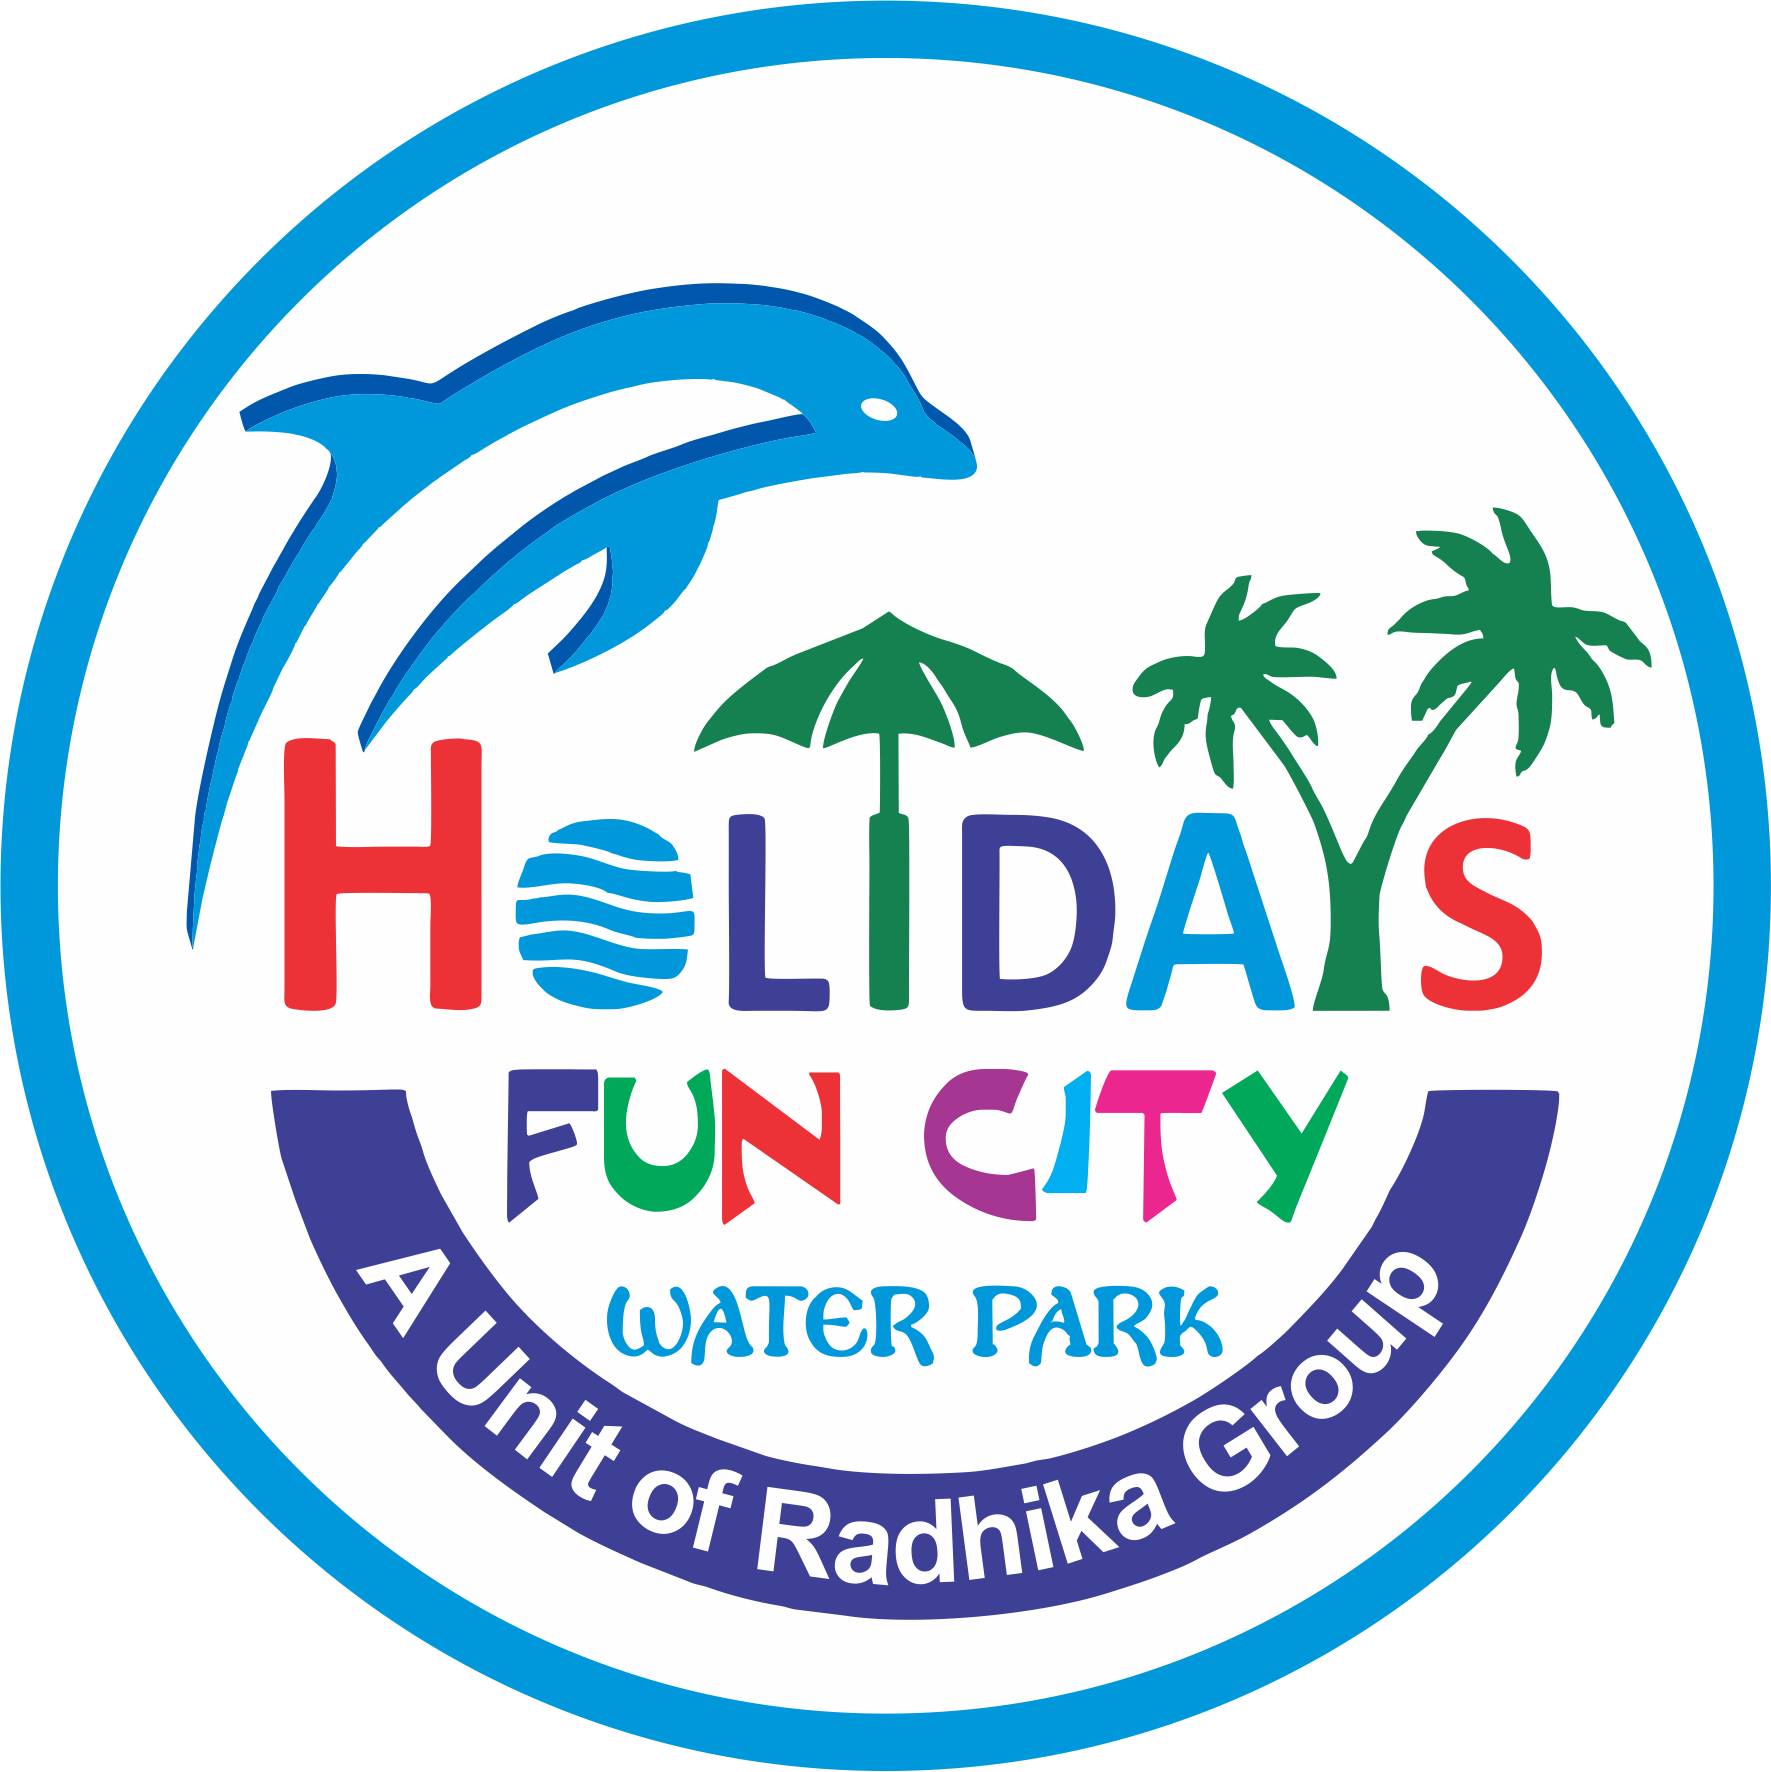 Holidays Fun City Water Park|Movie Theater|Entertainment